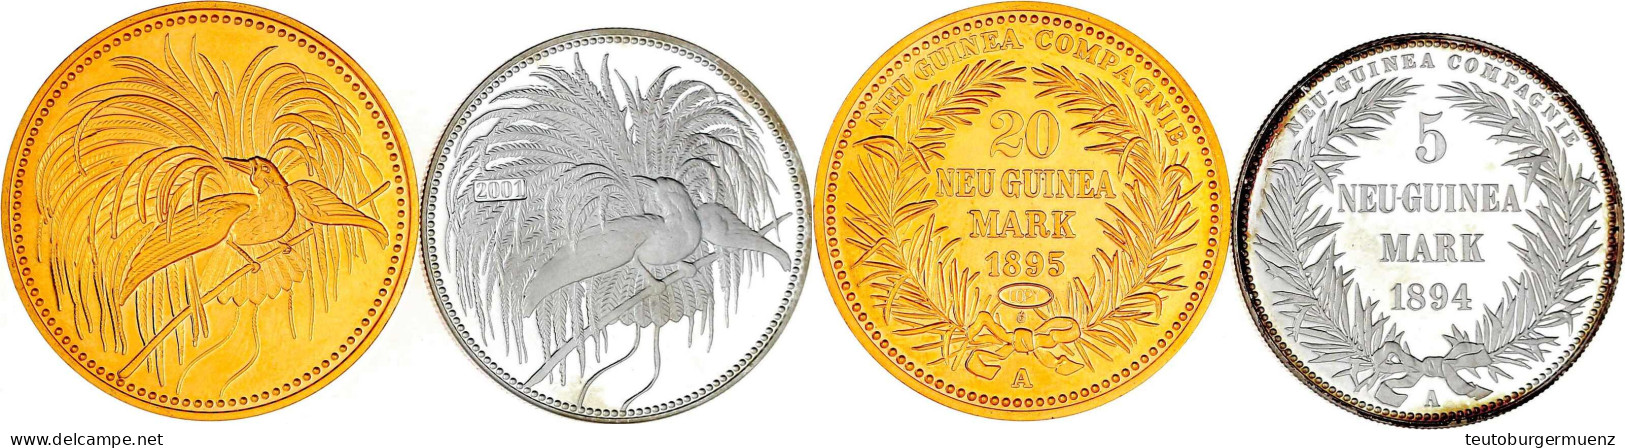 2 Neuprägungen: 5 Mark 1895/2001 Feinsilber In Originalgröße Und 20 Mark 1895 (Copy) In 5 Mark-Größe (CuNi Vergoldet). B - Nueva Guinea Alemana